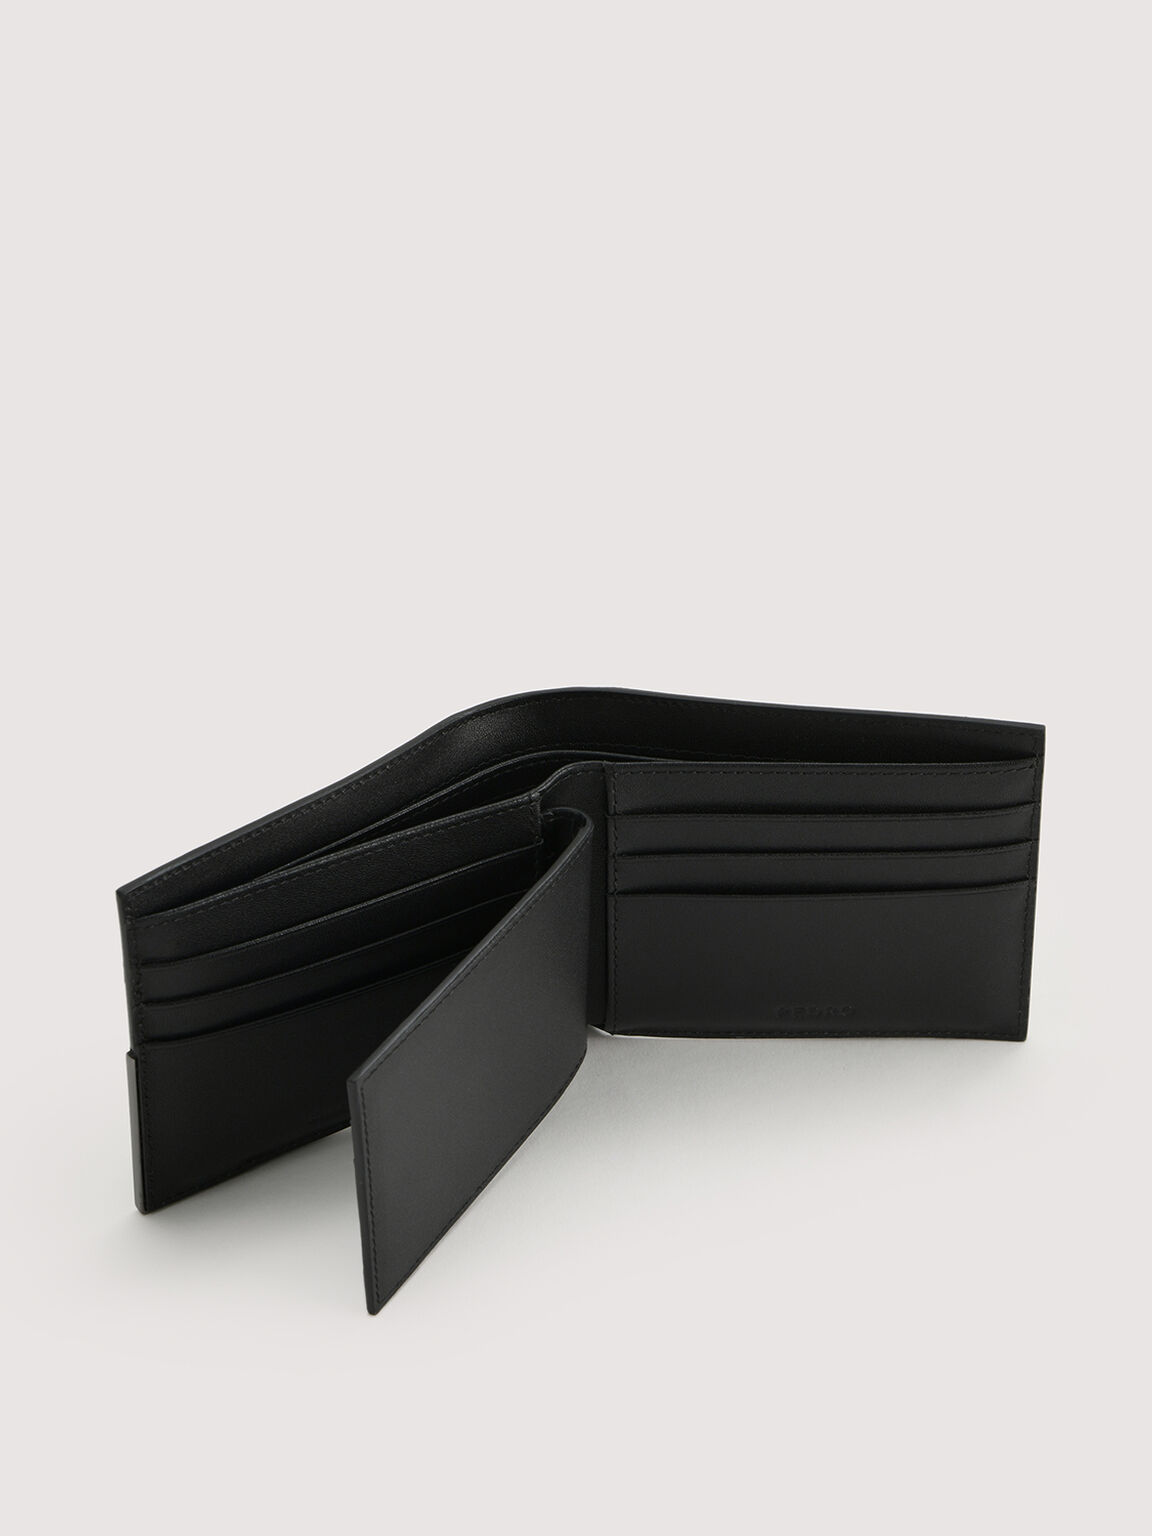 Leather Bi-Fold with Insert, Black